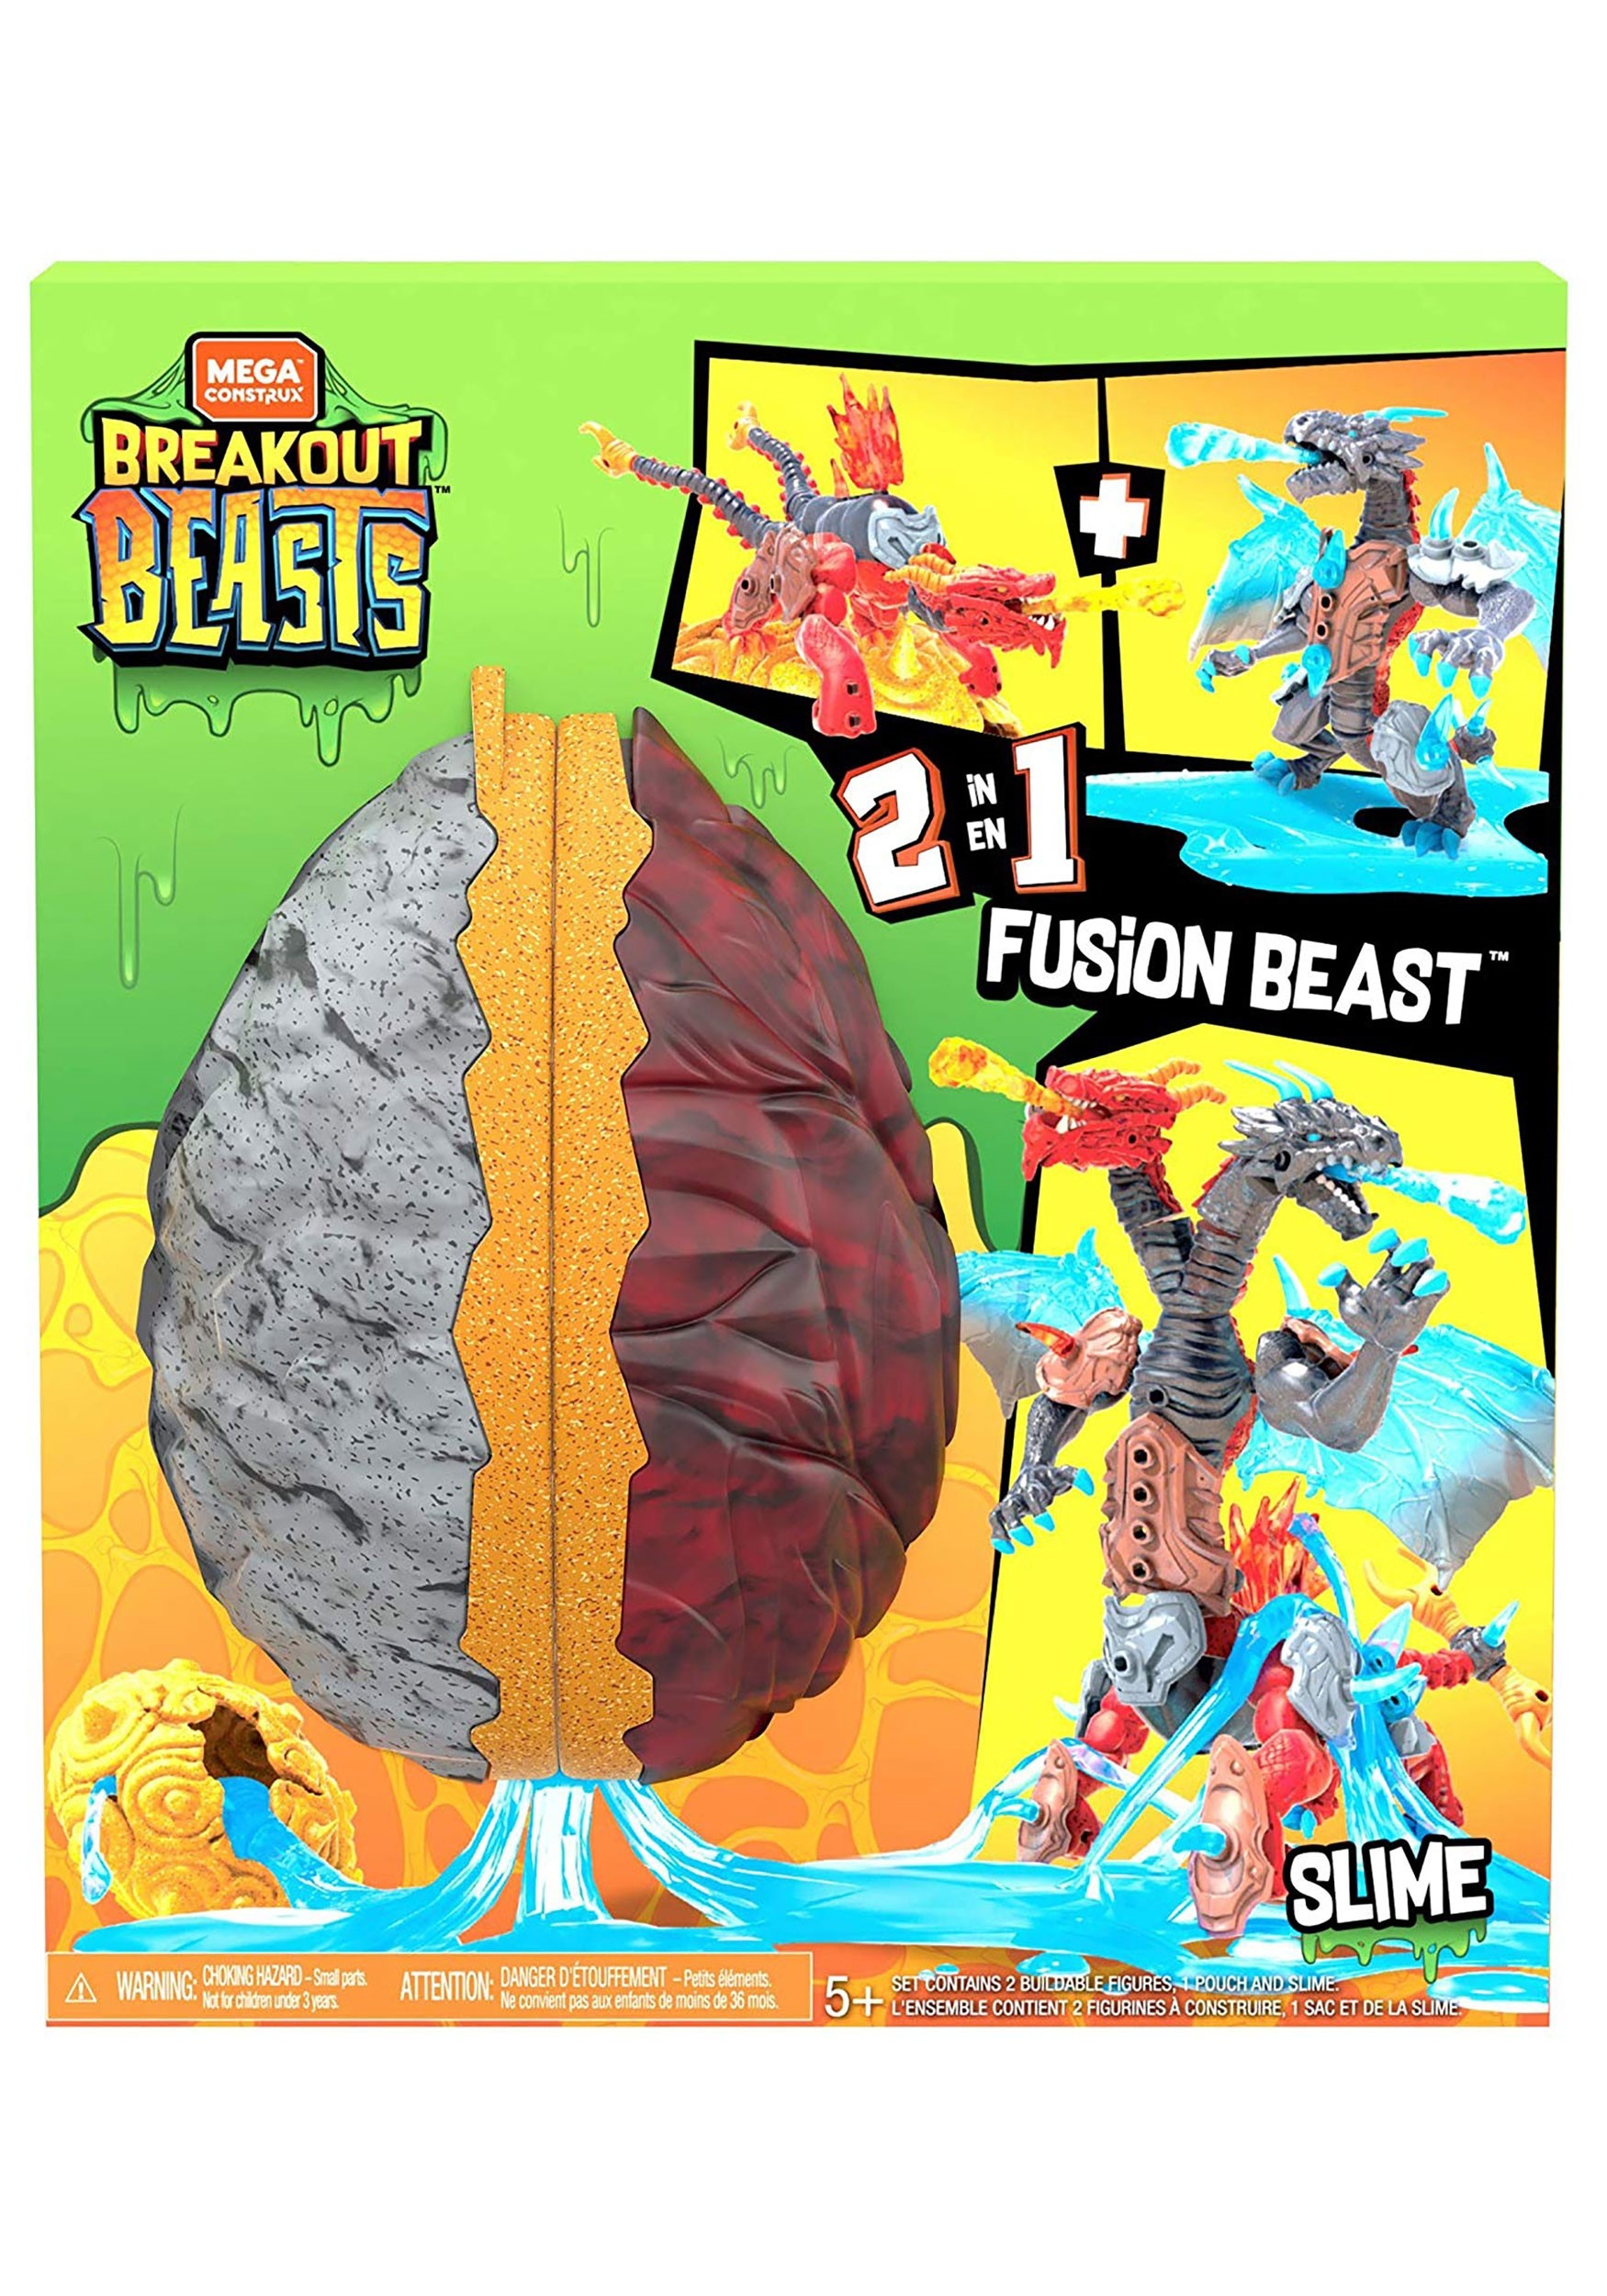 Mega Construx Breakout Beasts 2-in-1 Fusion Beast